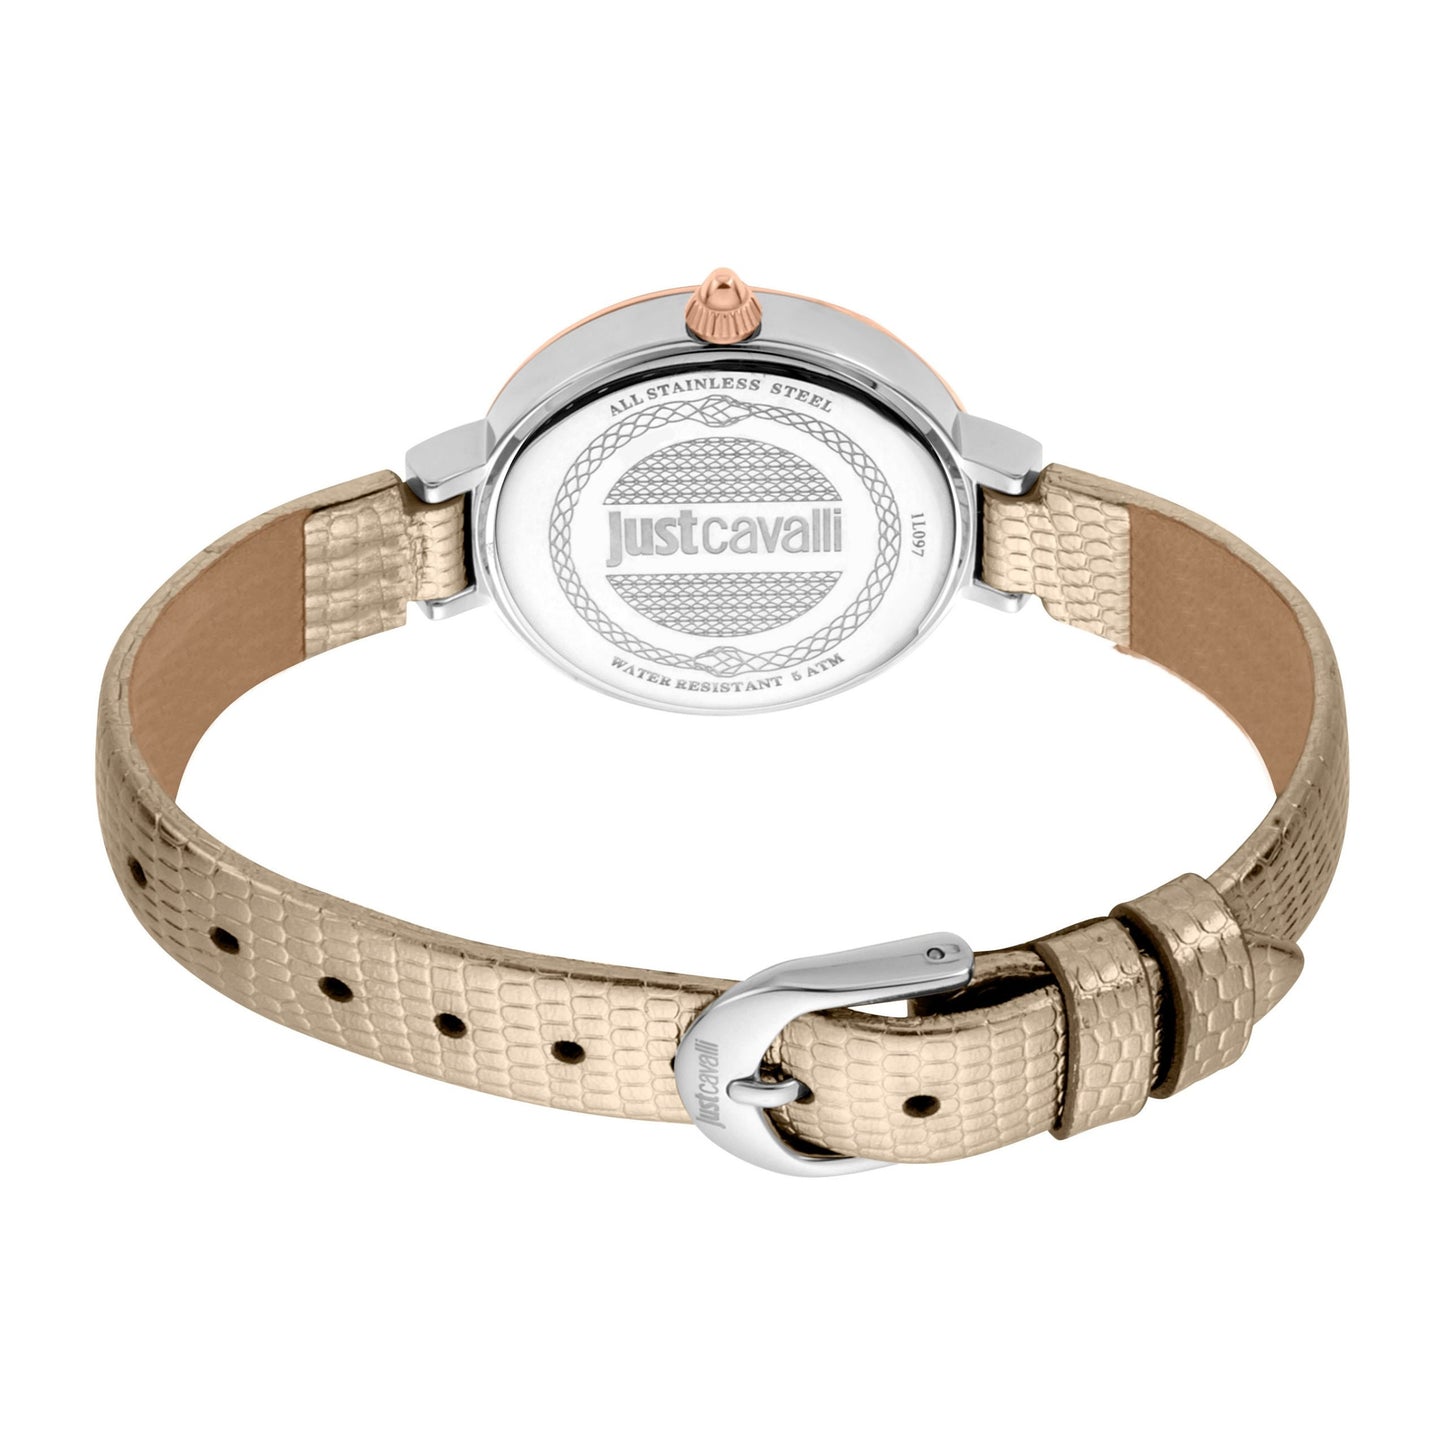 JUST CAVALLI Bellamonde 32mm Leather Rose Gold/Metallic Watch